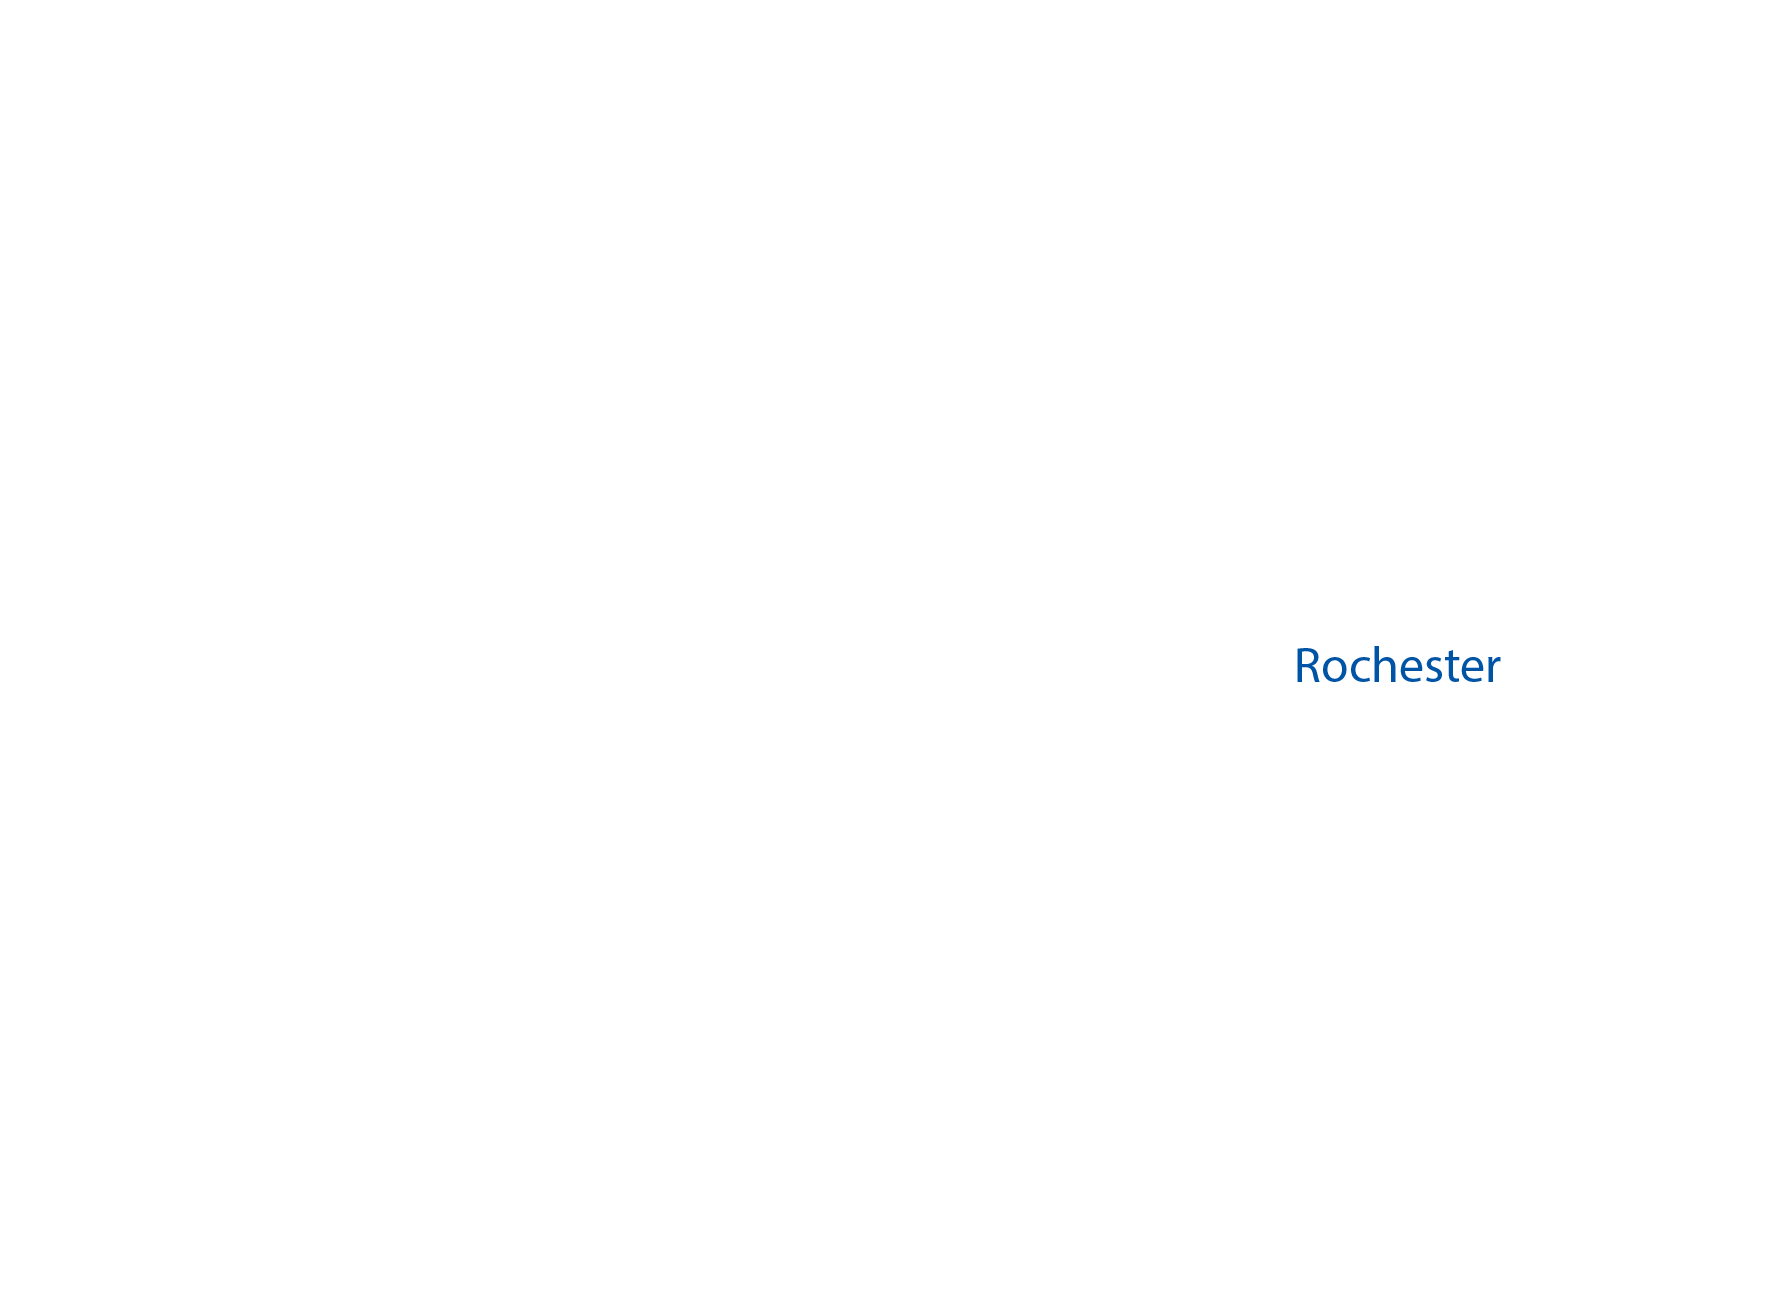 Rochester label